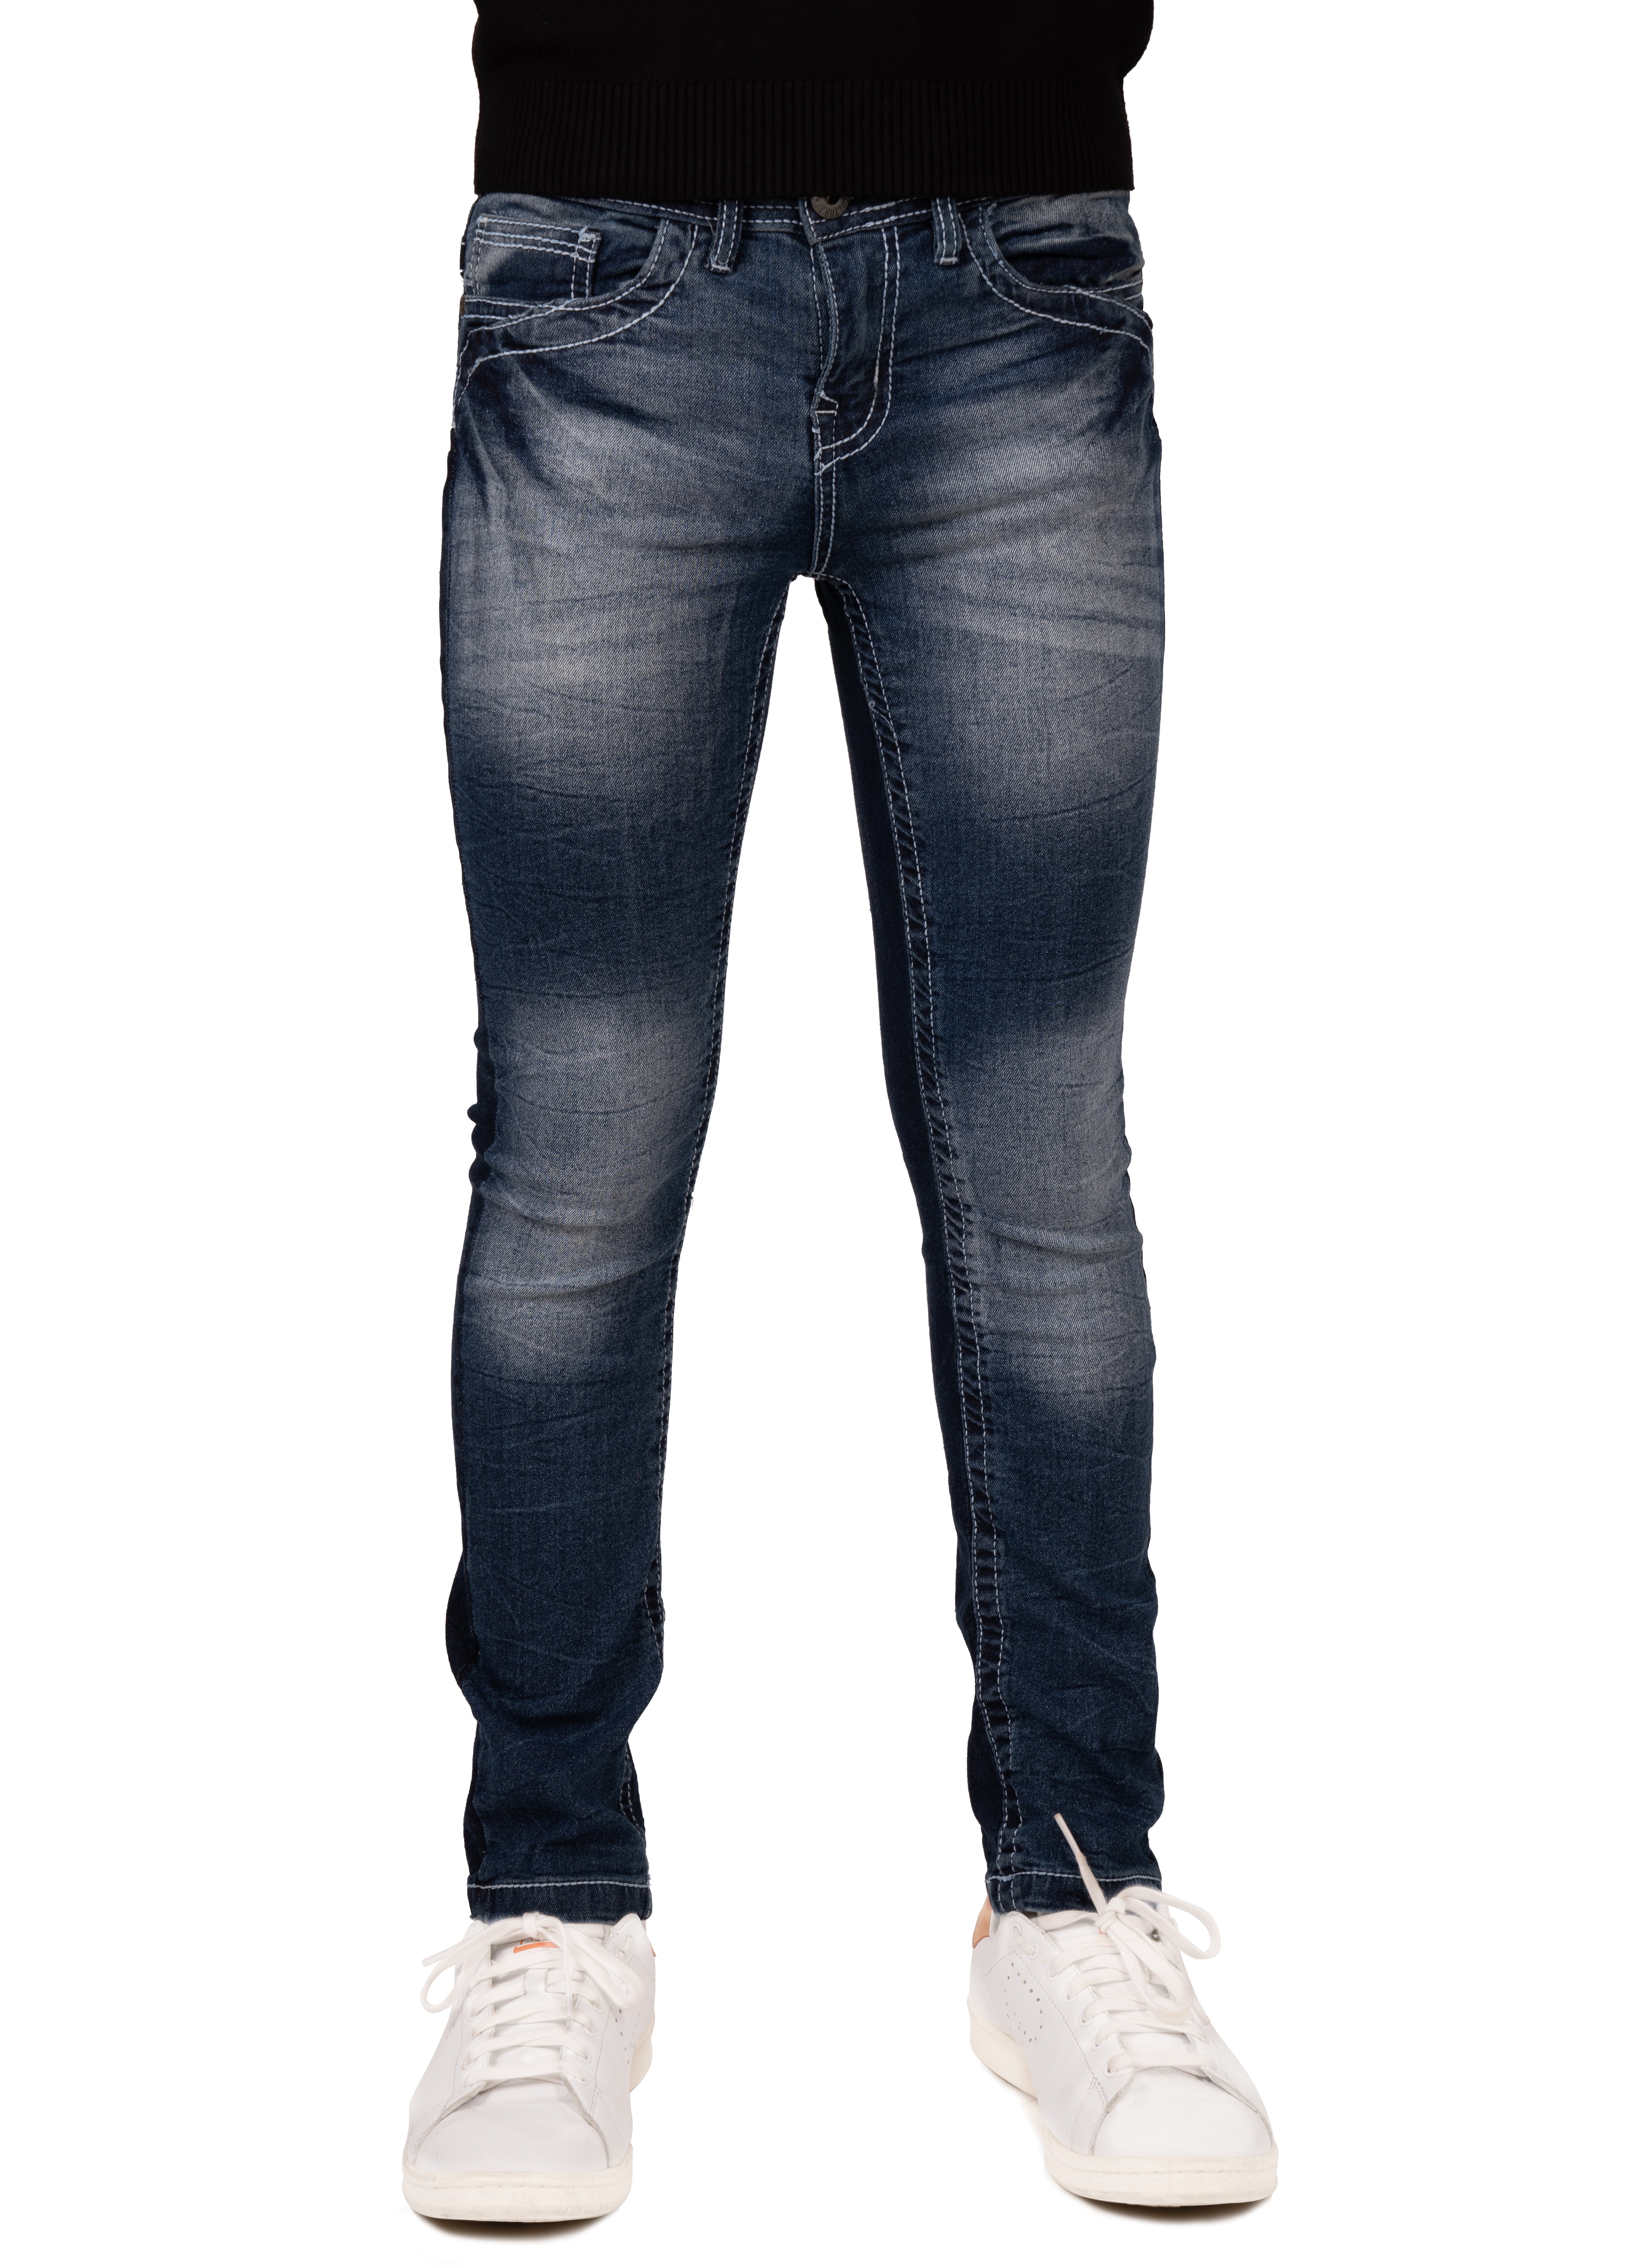 CULTURA Skinny Jeans 5 3-7, Size Wash Blue Stitch, for Denim Little Slim Stretch Boys Age Pants, Comfy Thick